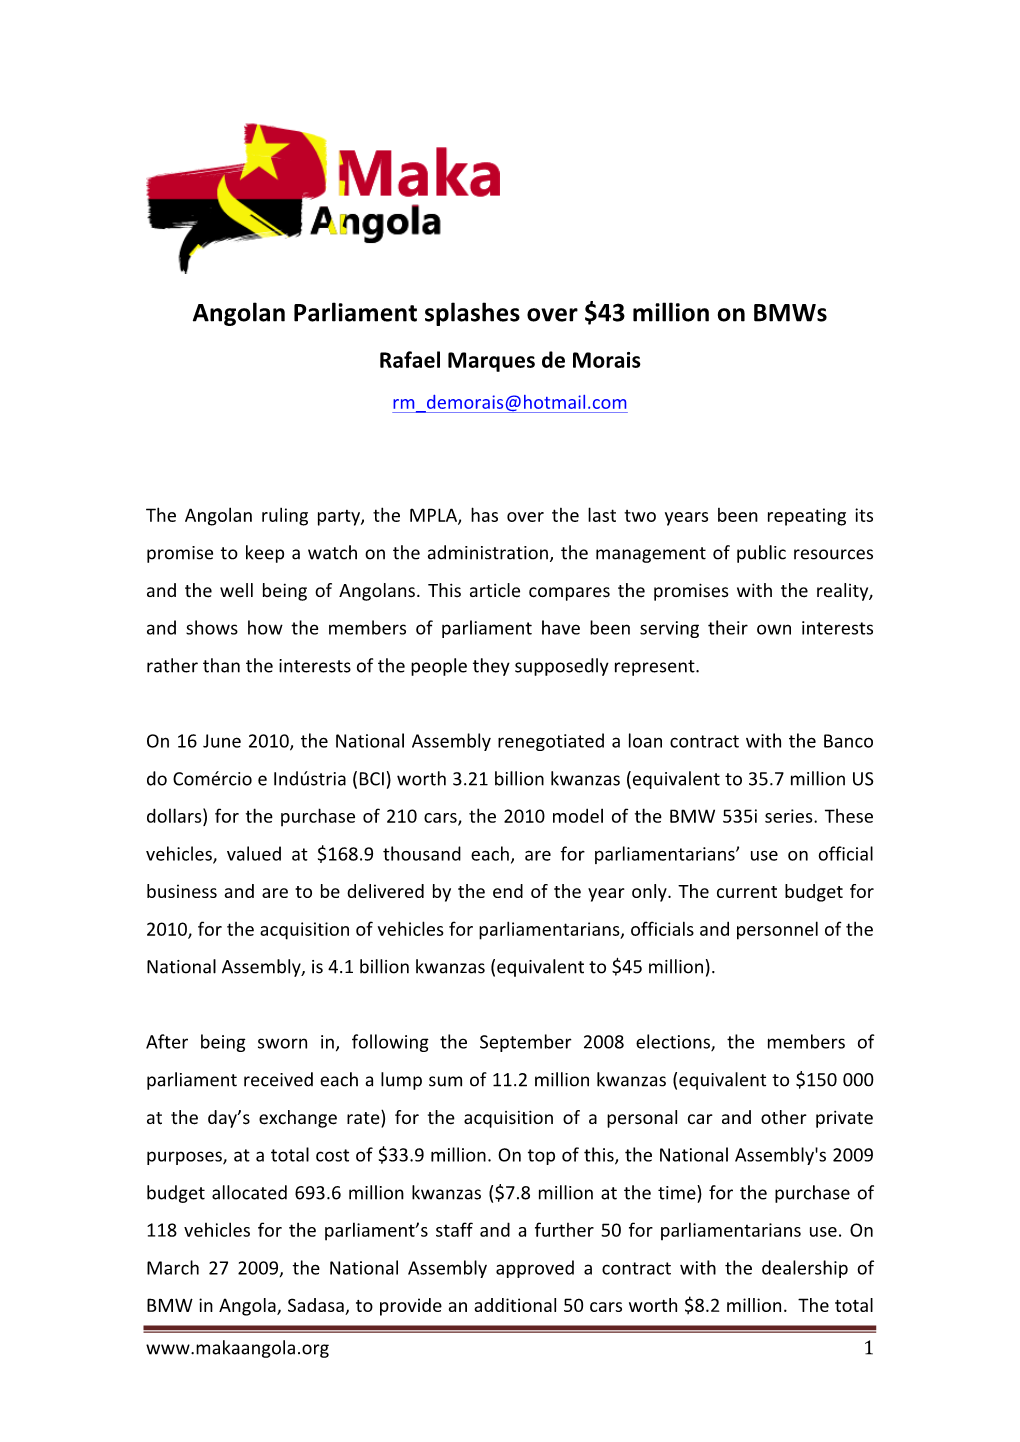 Angolan Parliament Splashes Over $43 Million on Bmws Rafael Marques De Morais Rm Demorais@Hotmail.Com